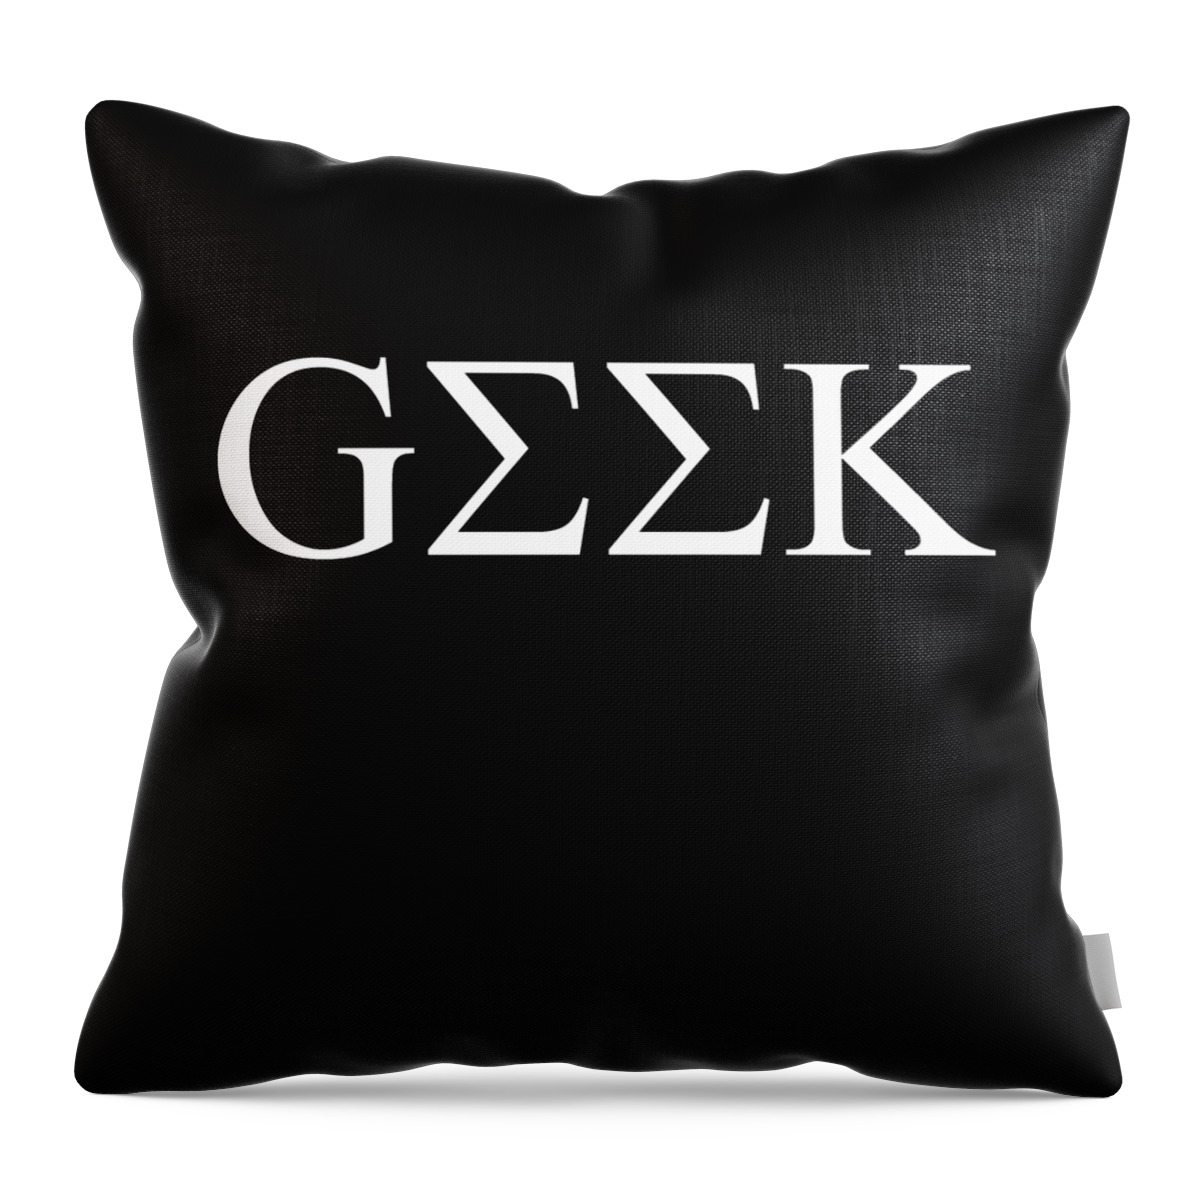 Cool Throw Pillow featuring the digital art Geek In Greek by Flippin Sweet Gear